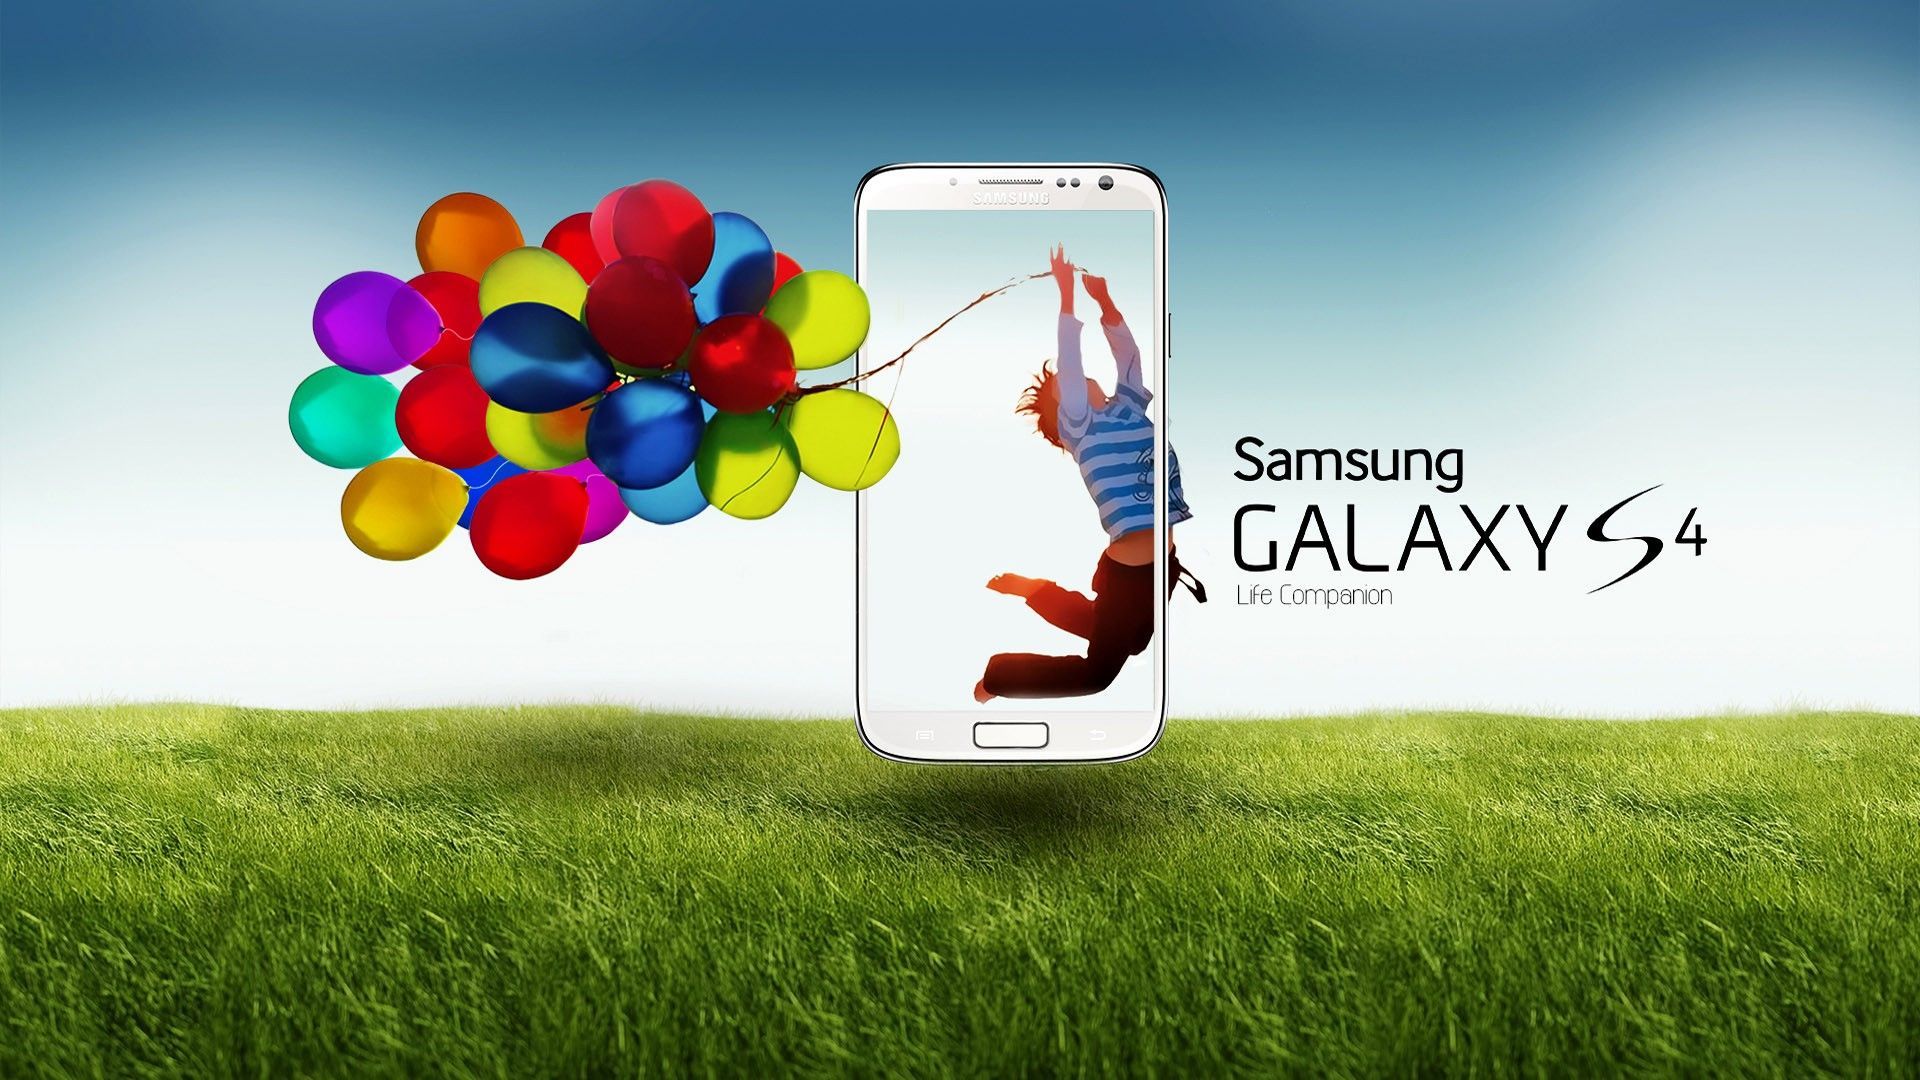 Samsung Galaxy Desktop Wallpapers | Download Free Desktop ...